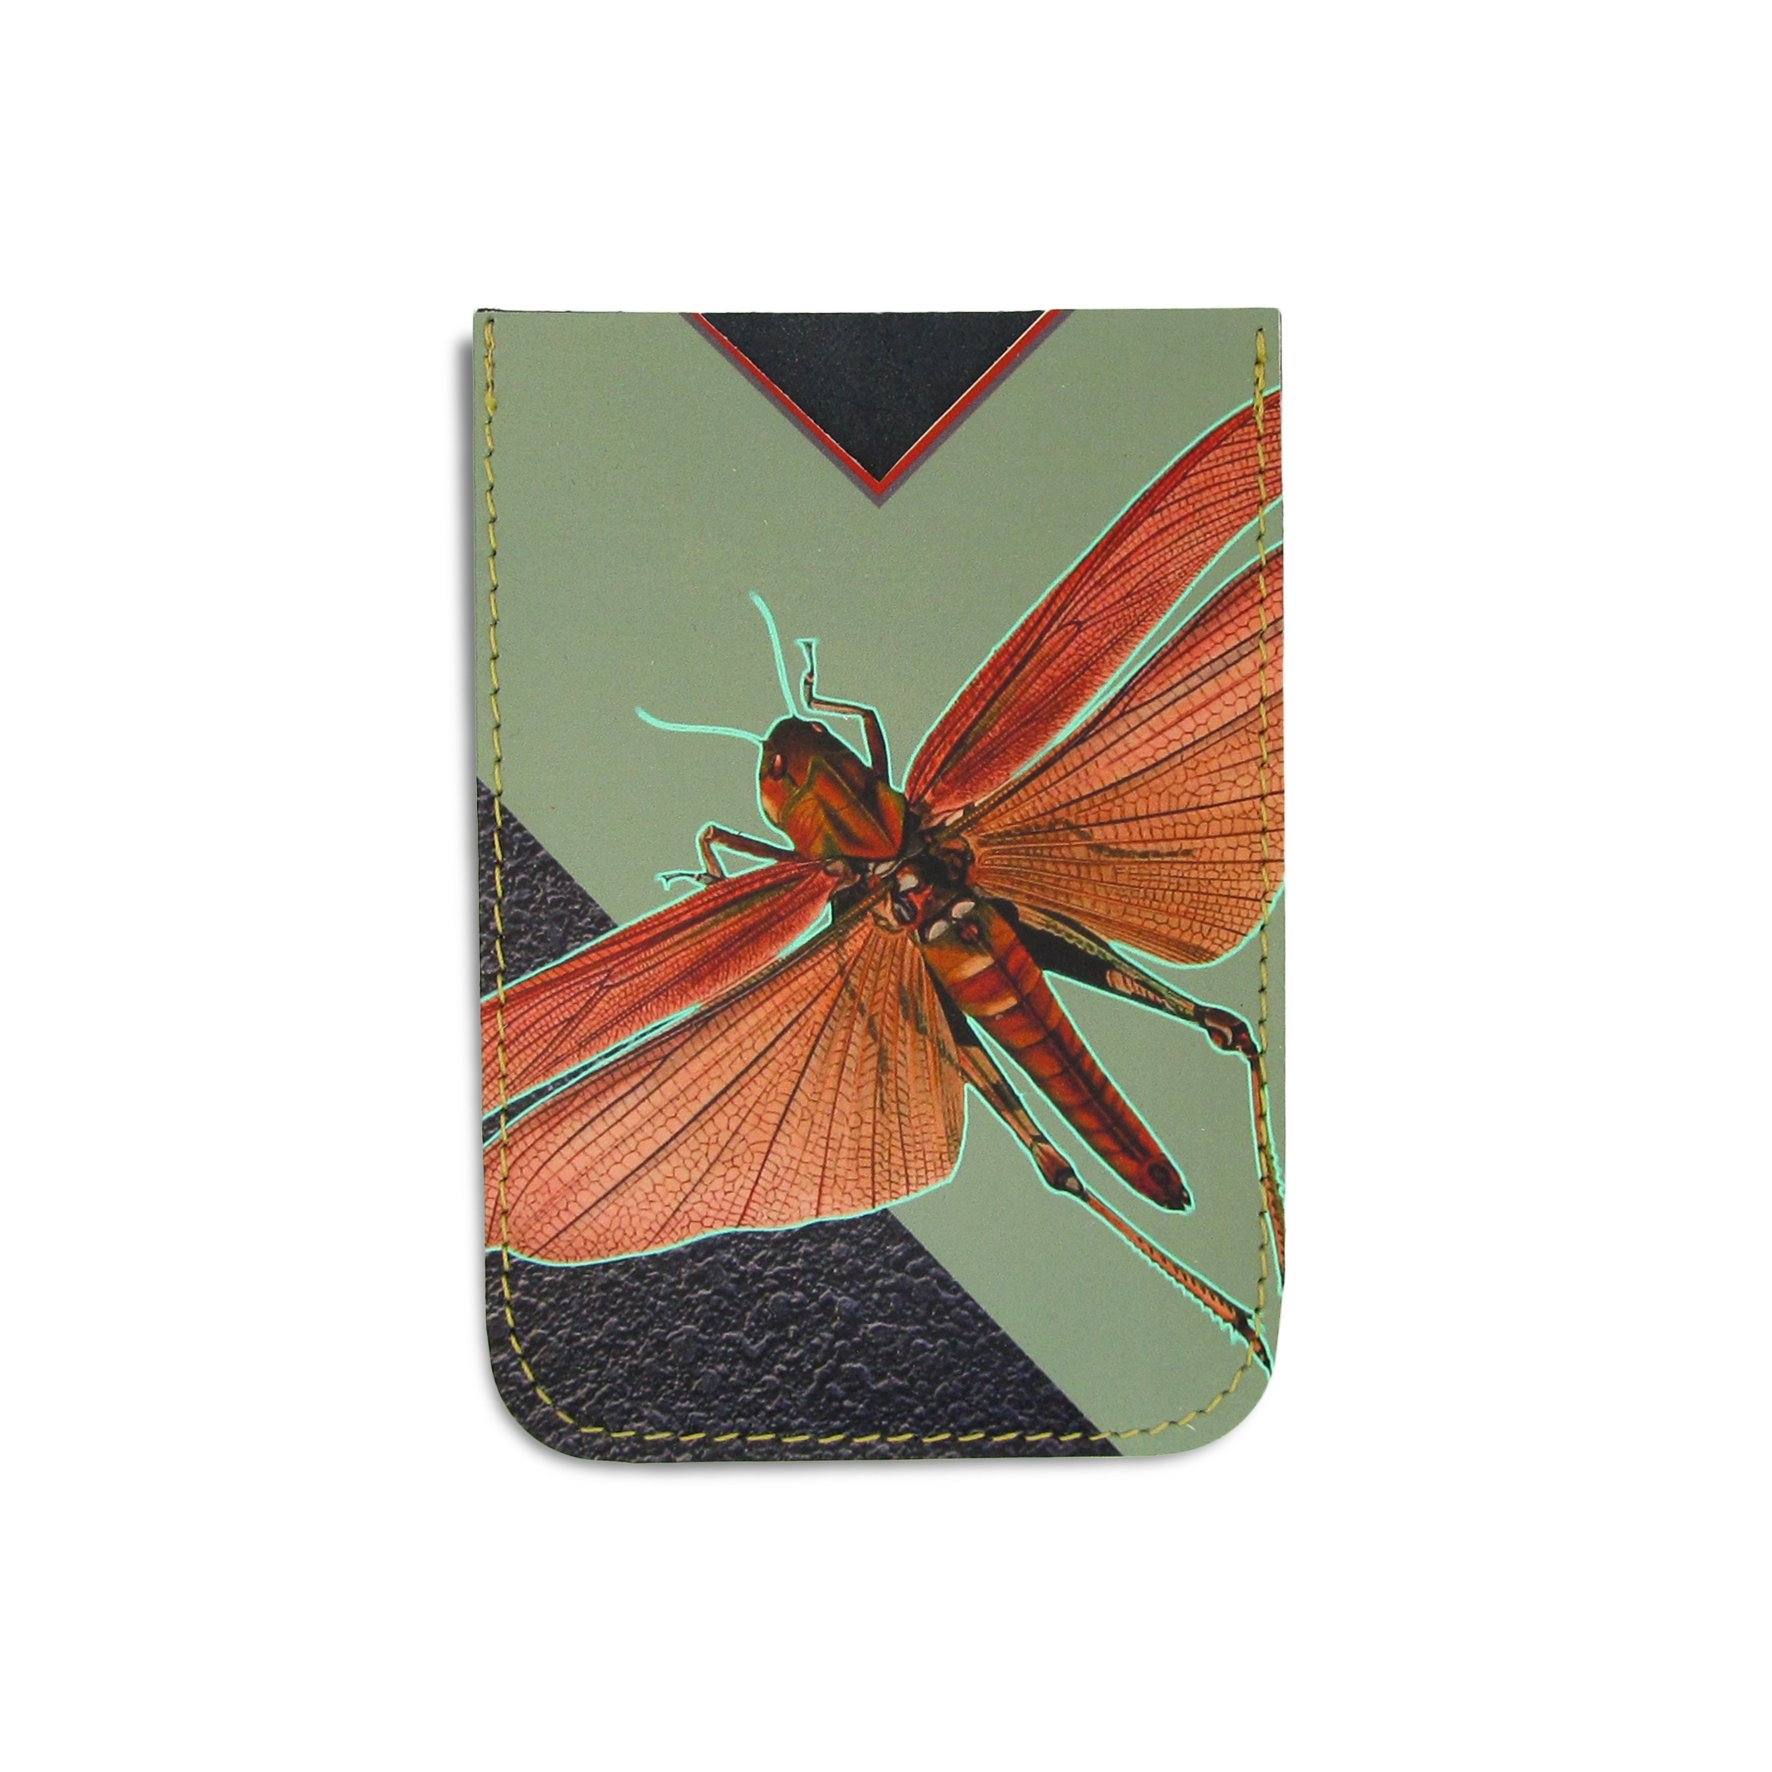 Leather Card Holder / Phone Sticker Wallet Pocket – Locust – Standard Card Holder / Without personalisation / Green